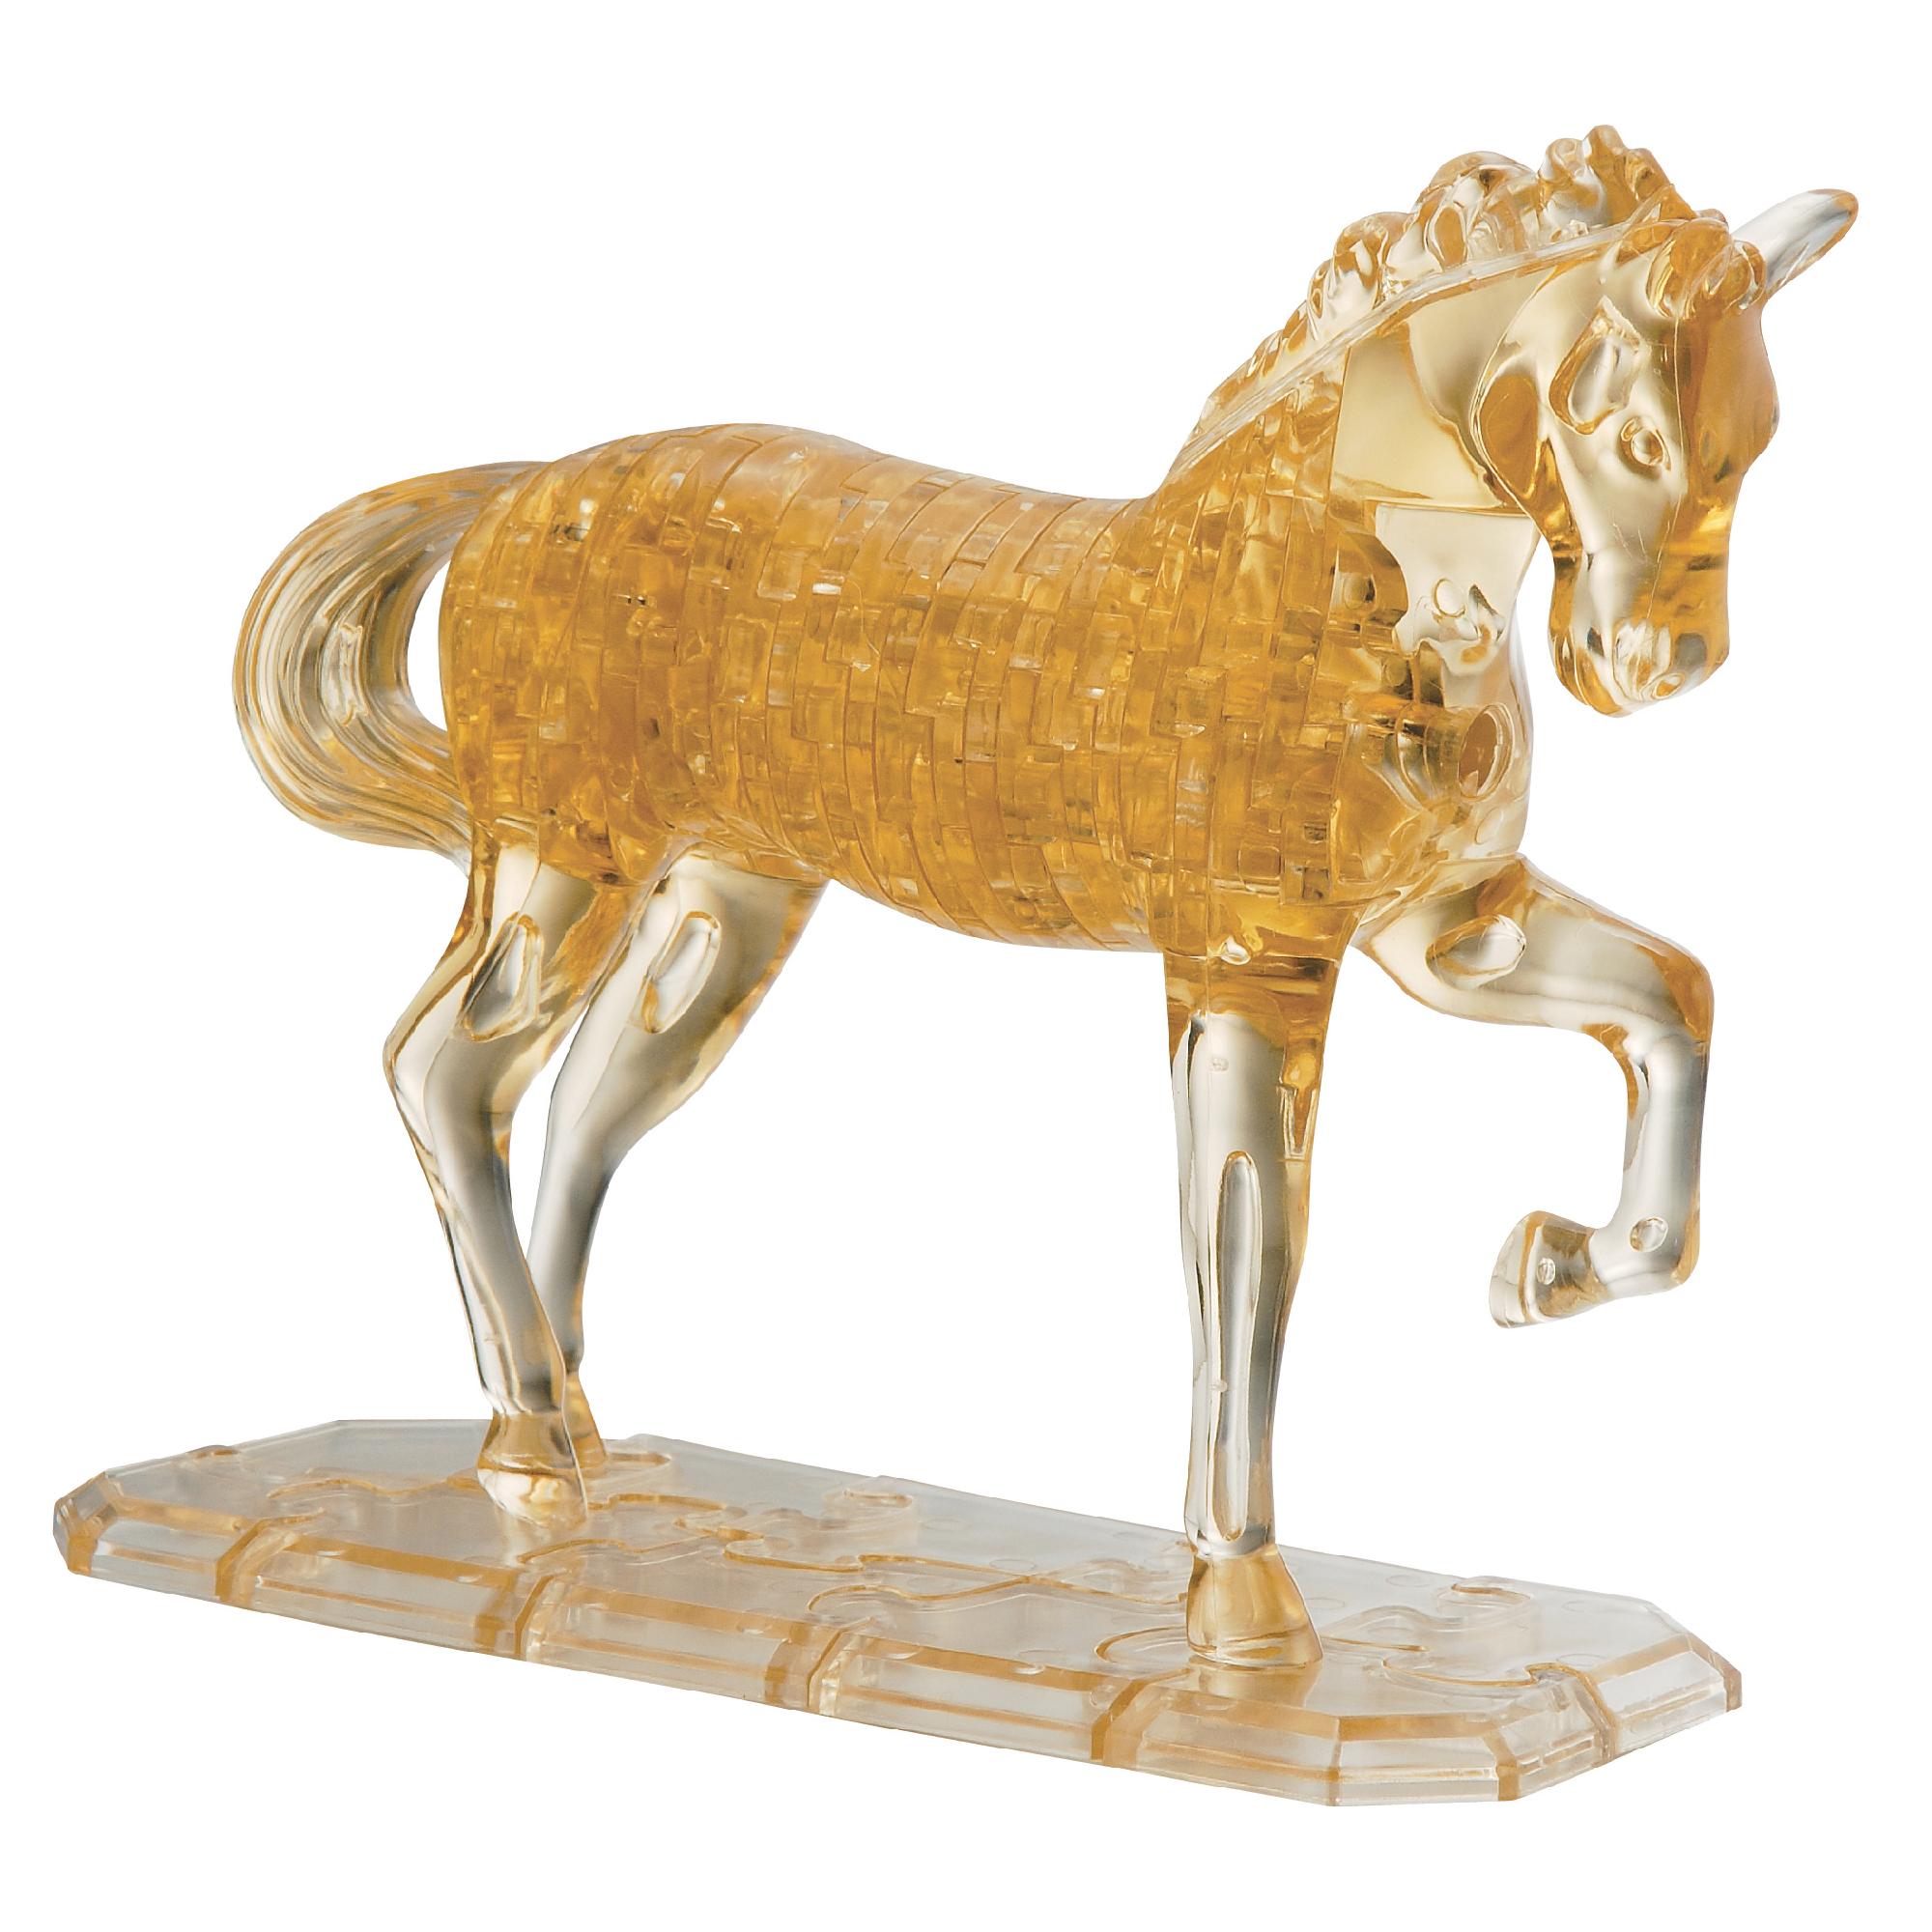 Bepuzzled 3D Crystal Puzzle - Horse: 100 Pcs